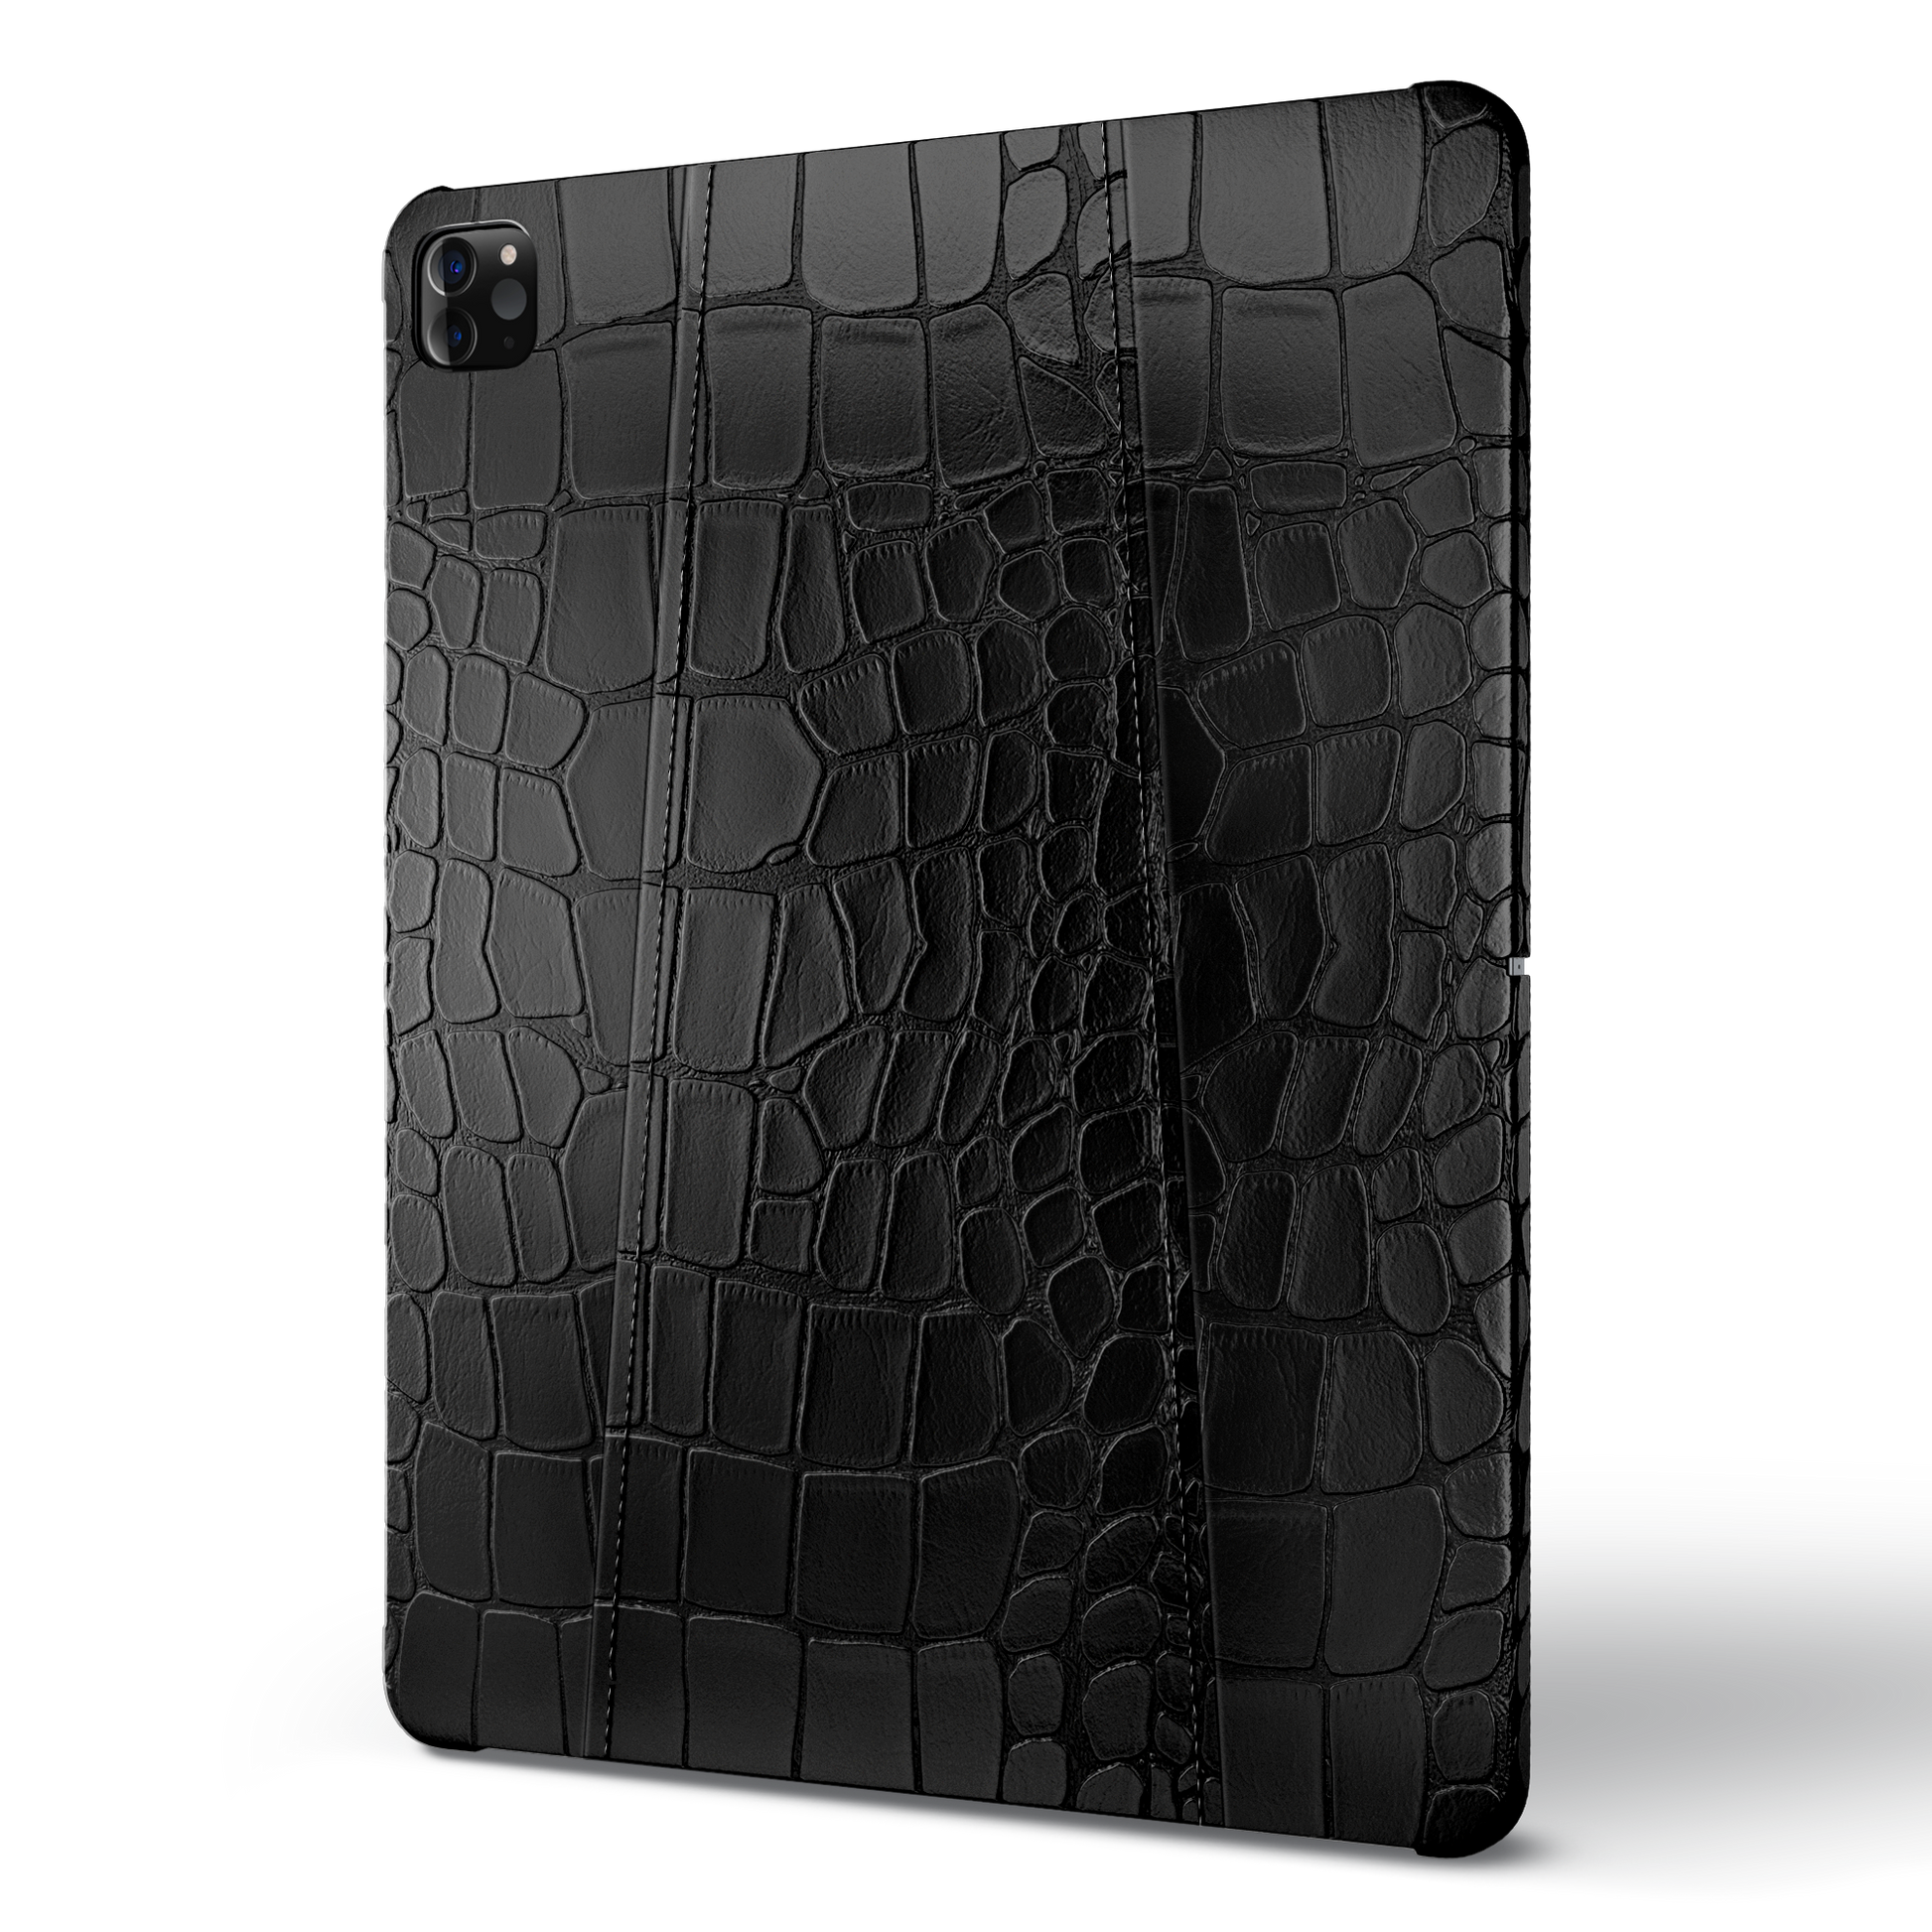 Ipad Pro (6th Gen) 12.9-inch Black Alligator Case